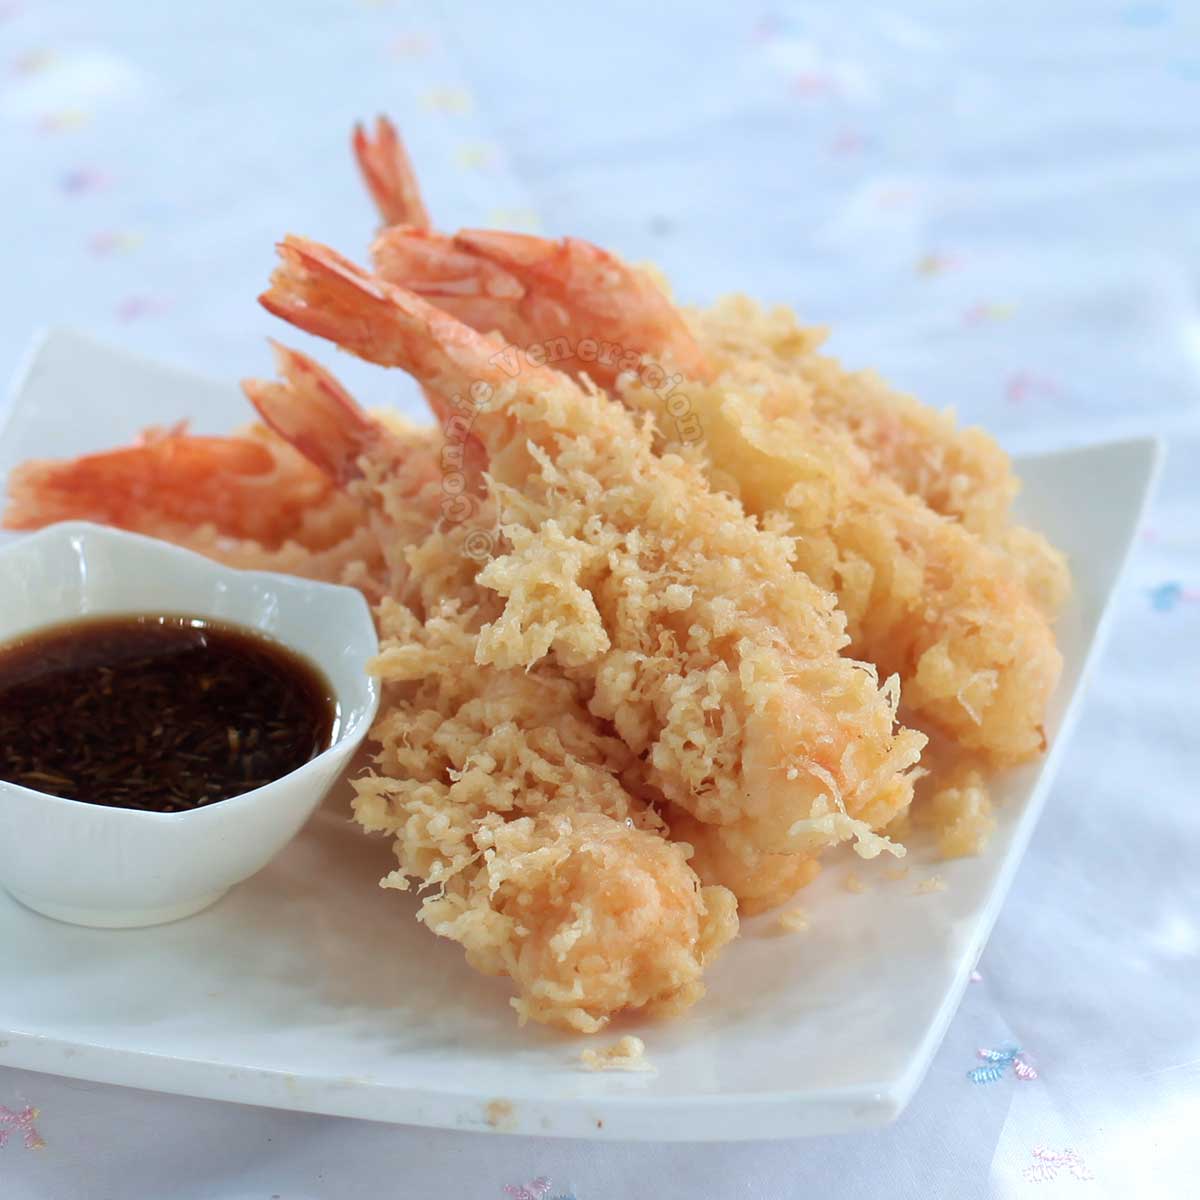 Ebi (shrimp) tempura with tentsuyu